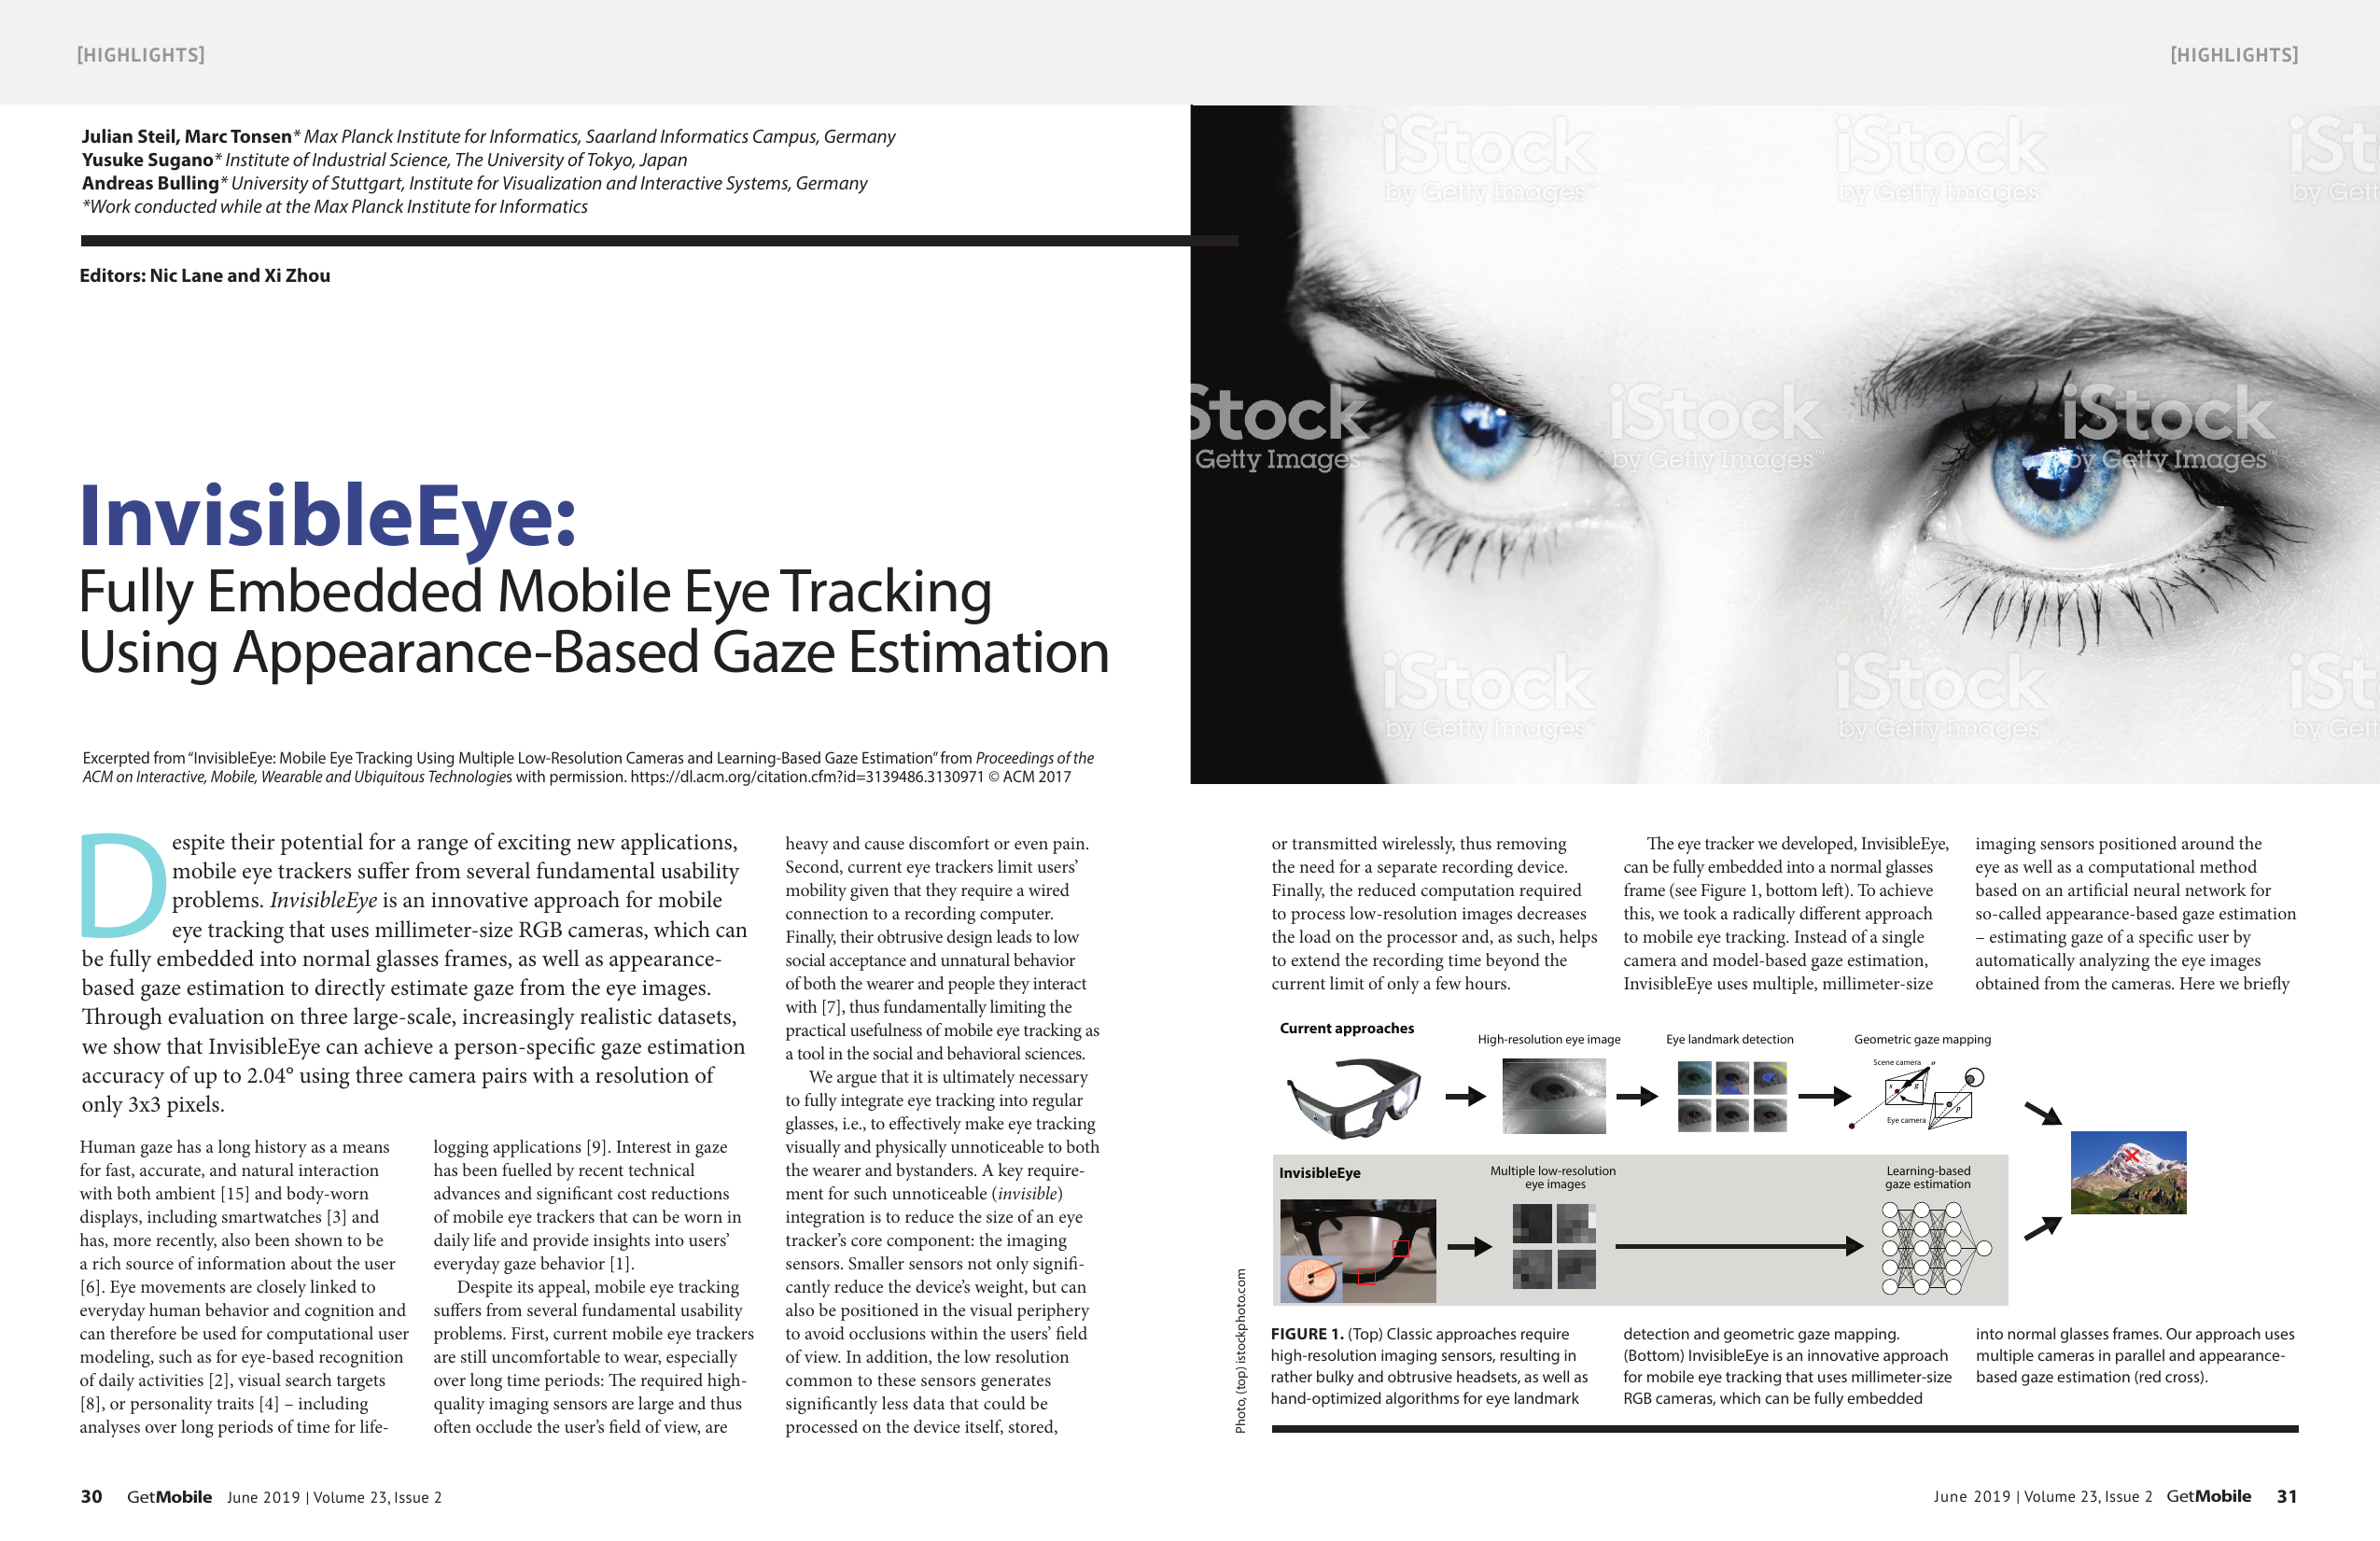 InvisibleEye: Fully Embedded Mobile Eye Tracking Using Appearance-Based Gaze Estimation